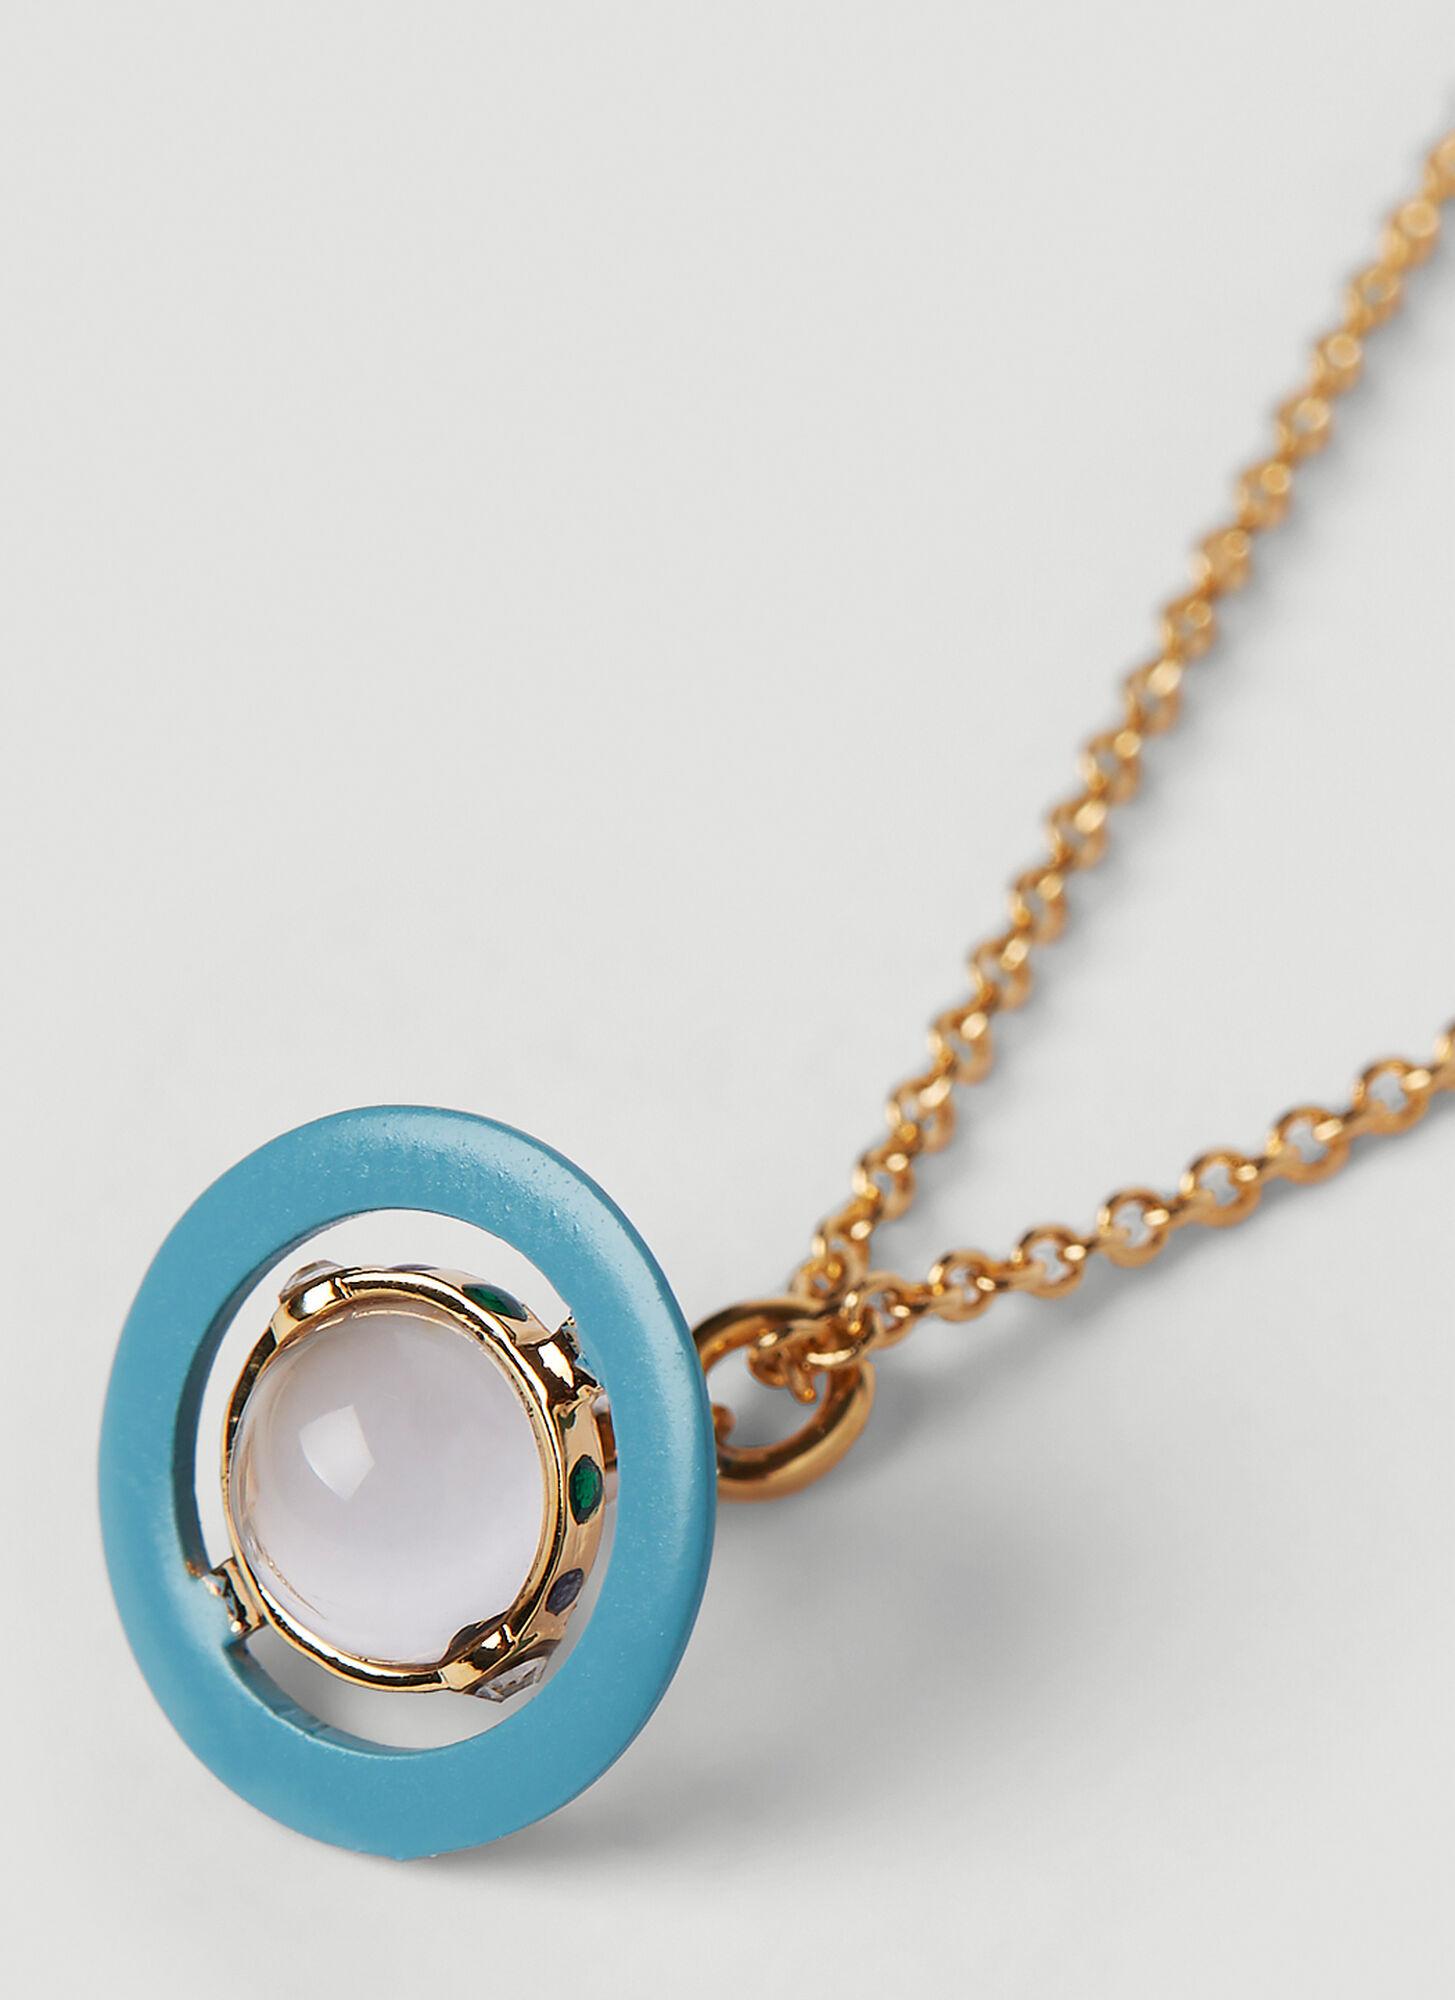 Vivienne Westwood Petite Original Orb Pendant Necklace in White | Lyst